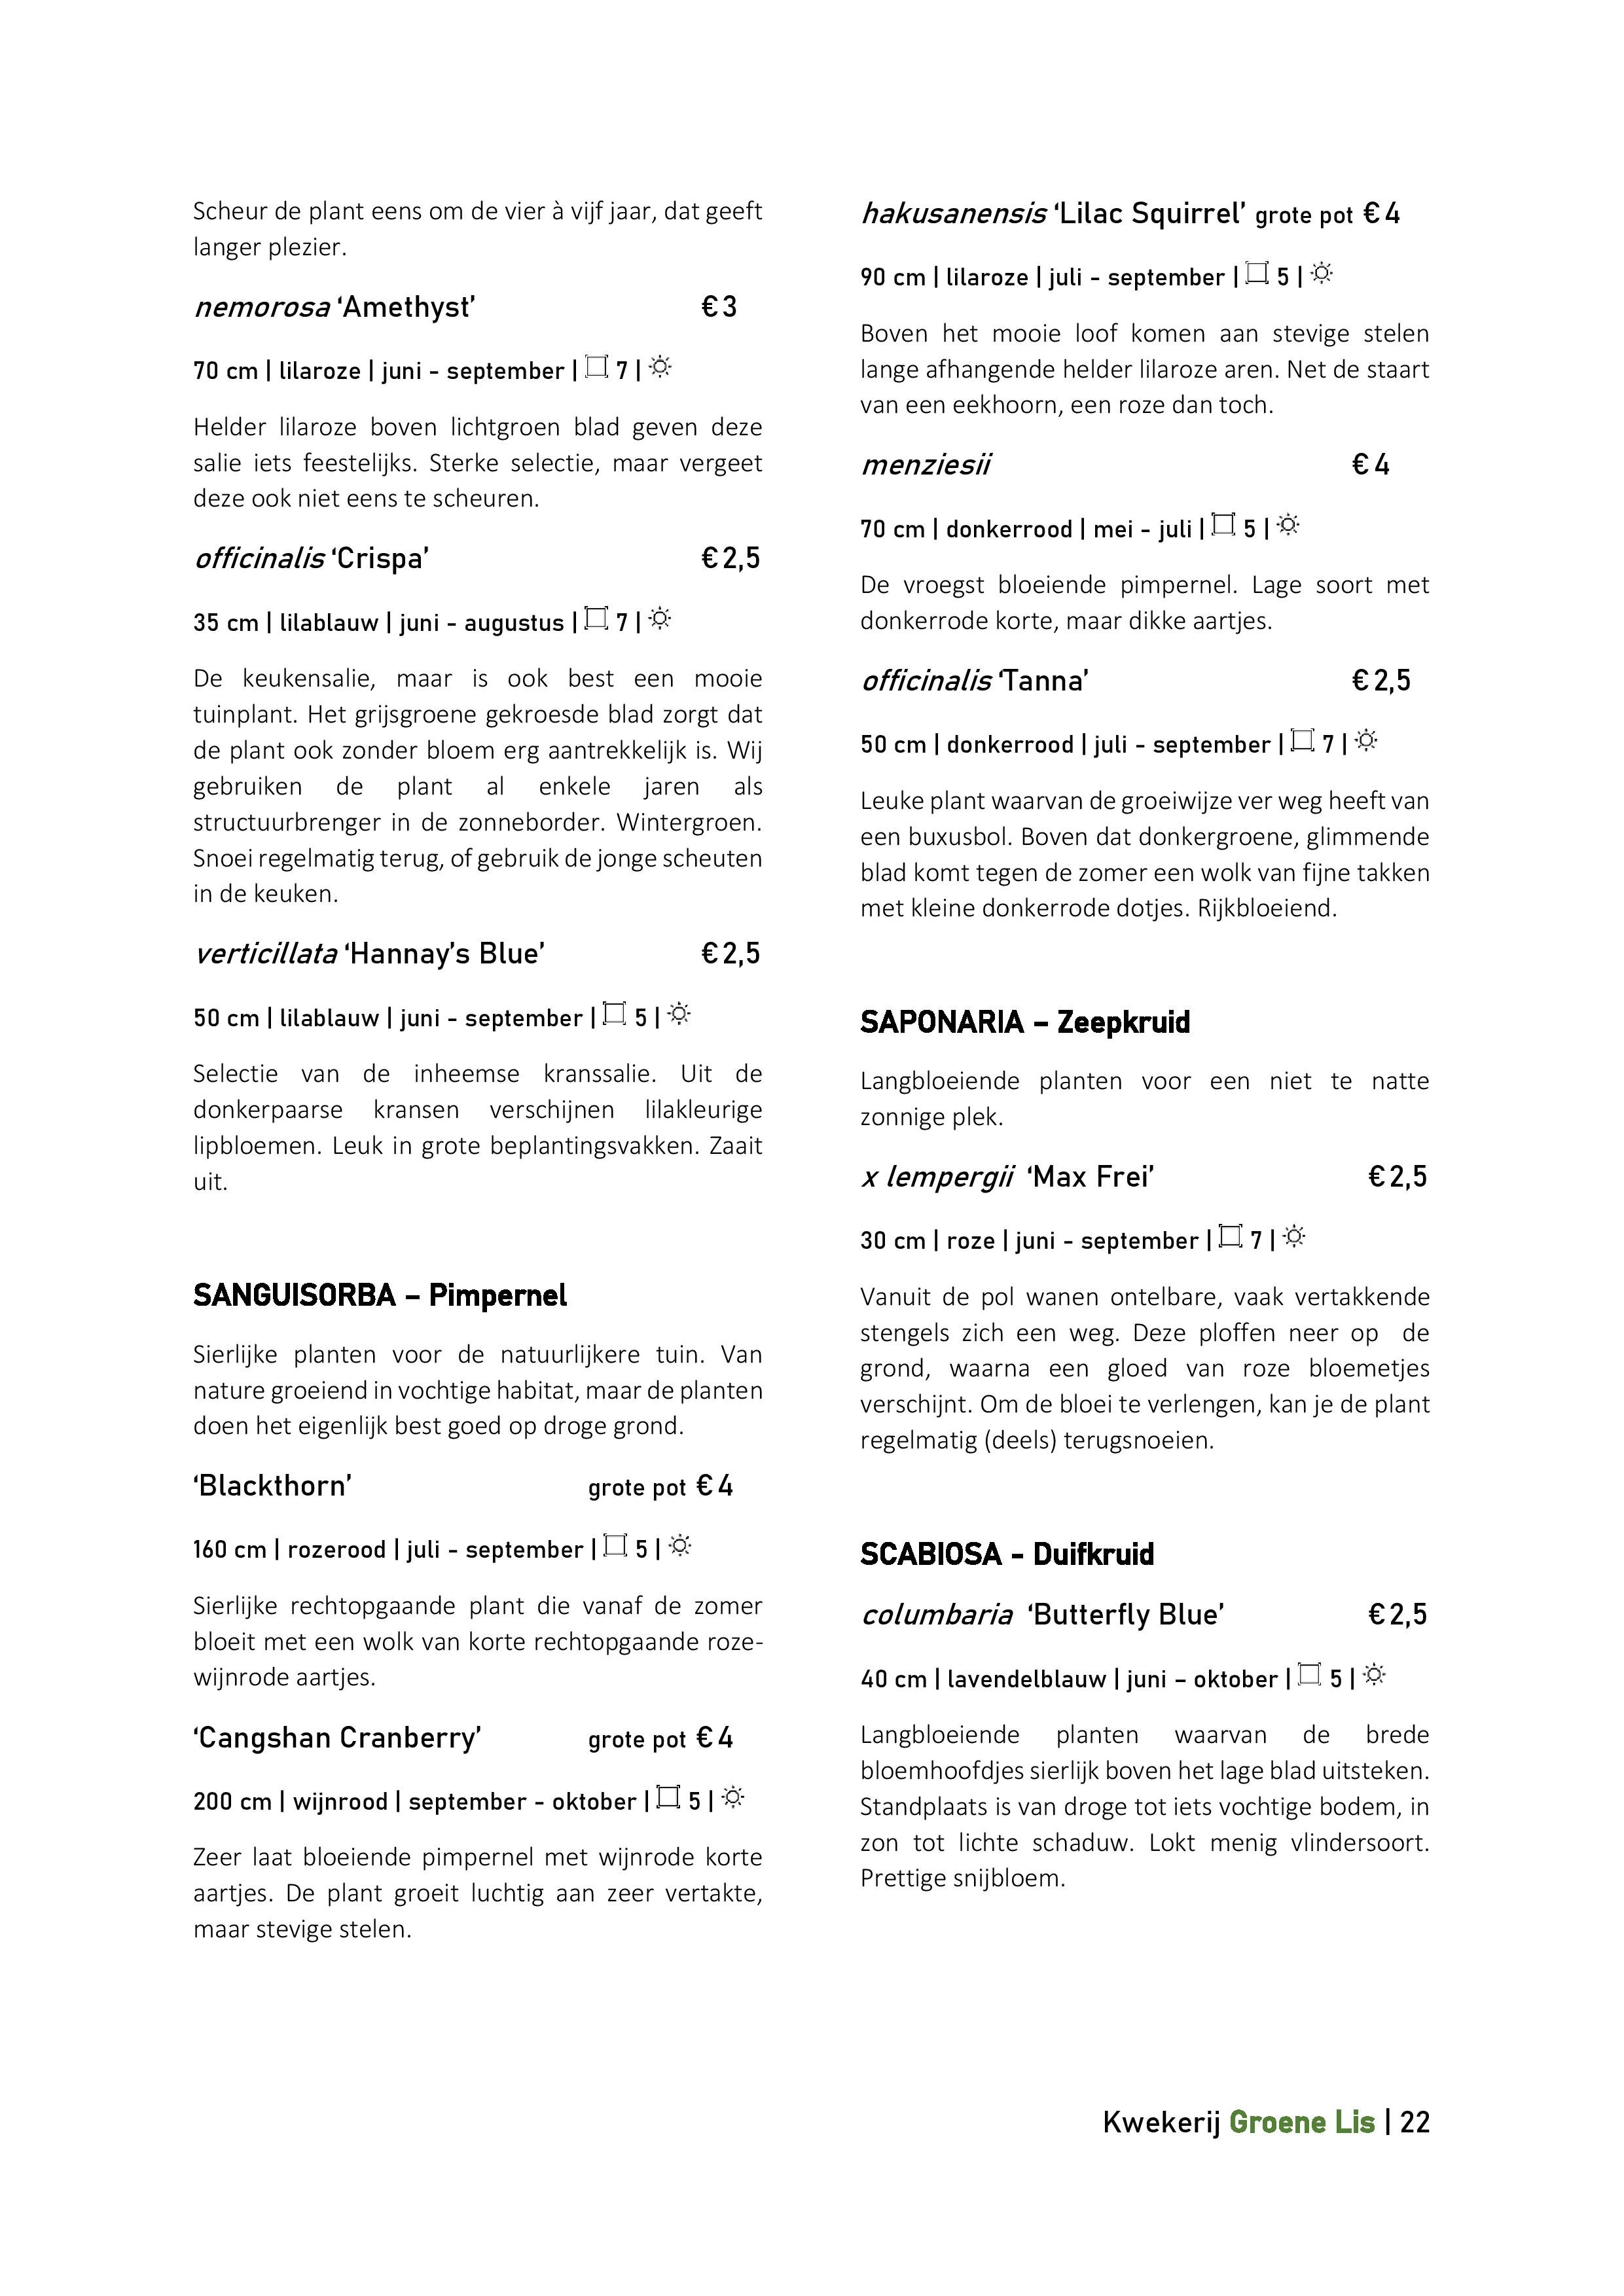 Catalogus_Groene Lis_2020-page-022.jpg